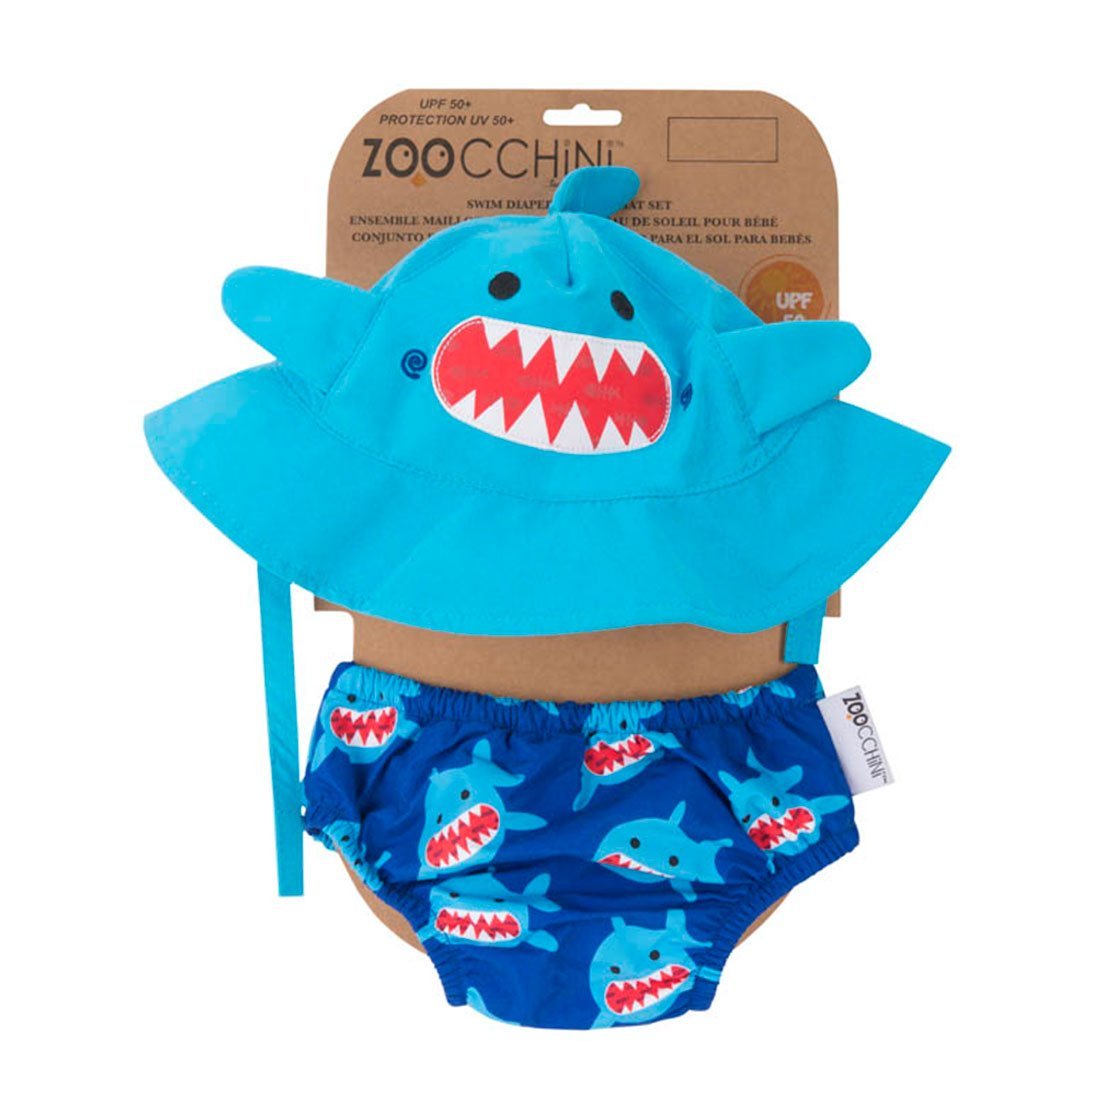 Zoocchini Swimdiaper & Sunhat Set - Shark